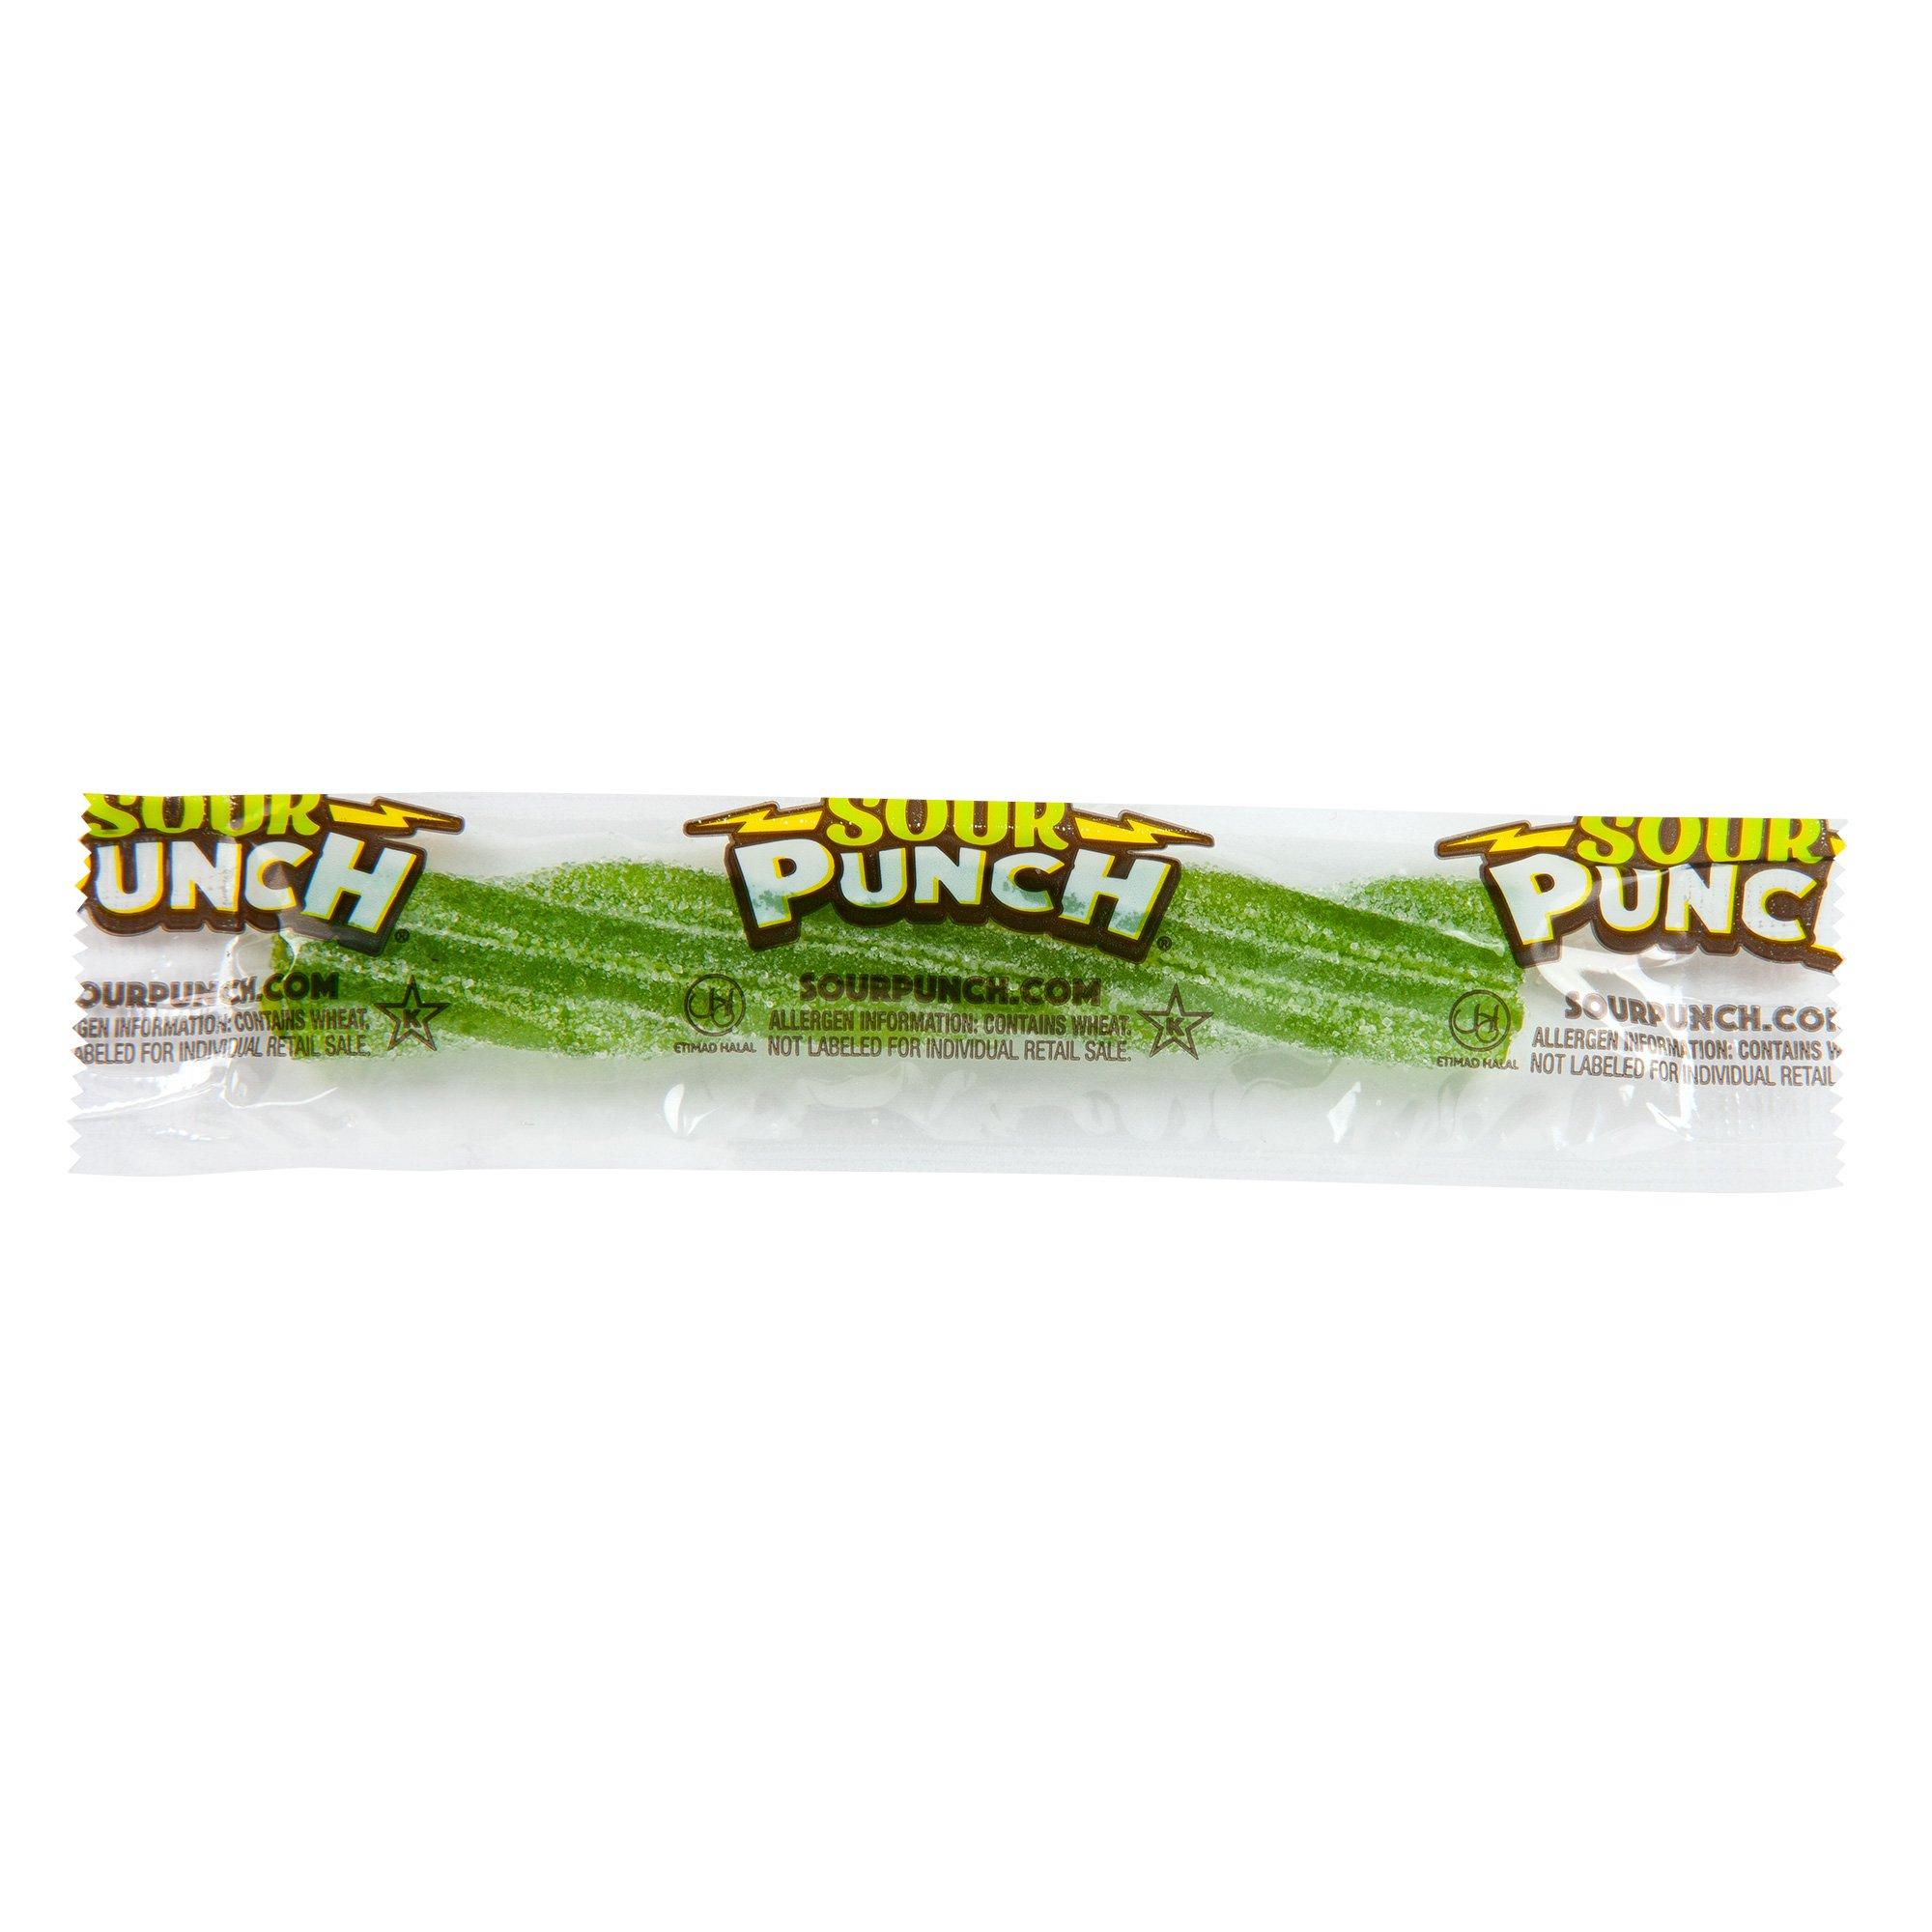 Sour Punch Green Apple & Berry Santa Straws 3.7 oz